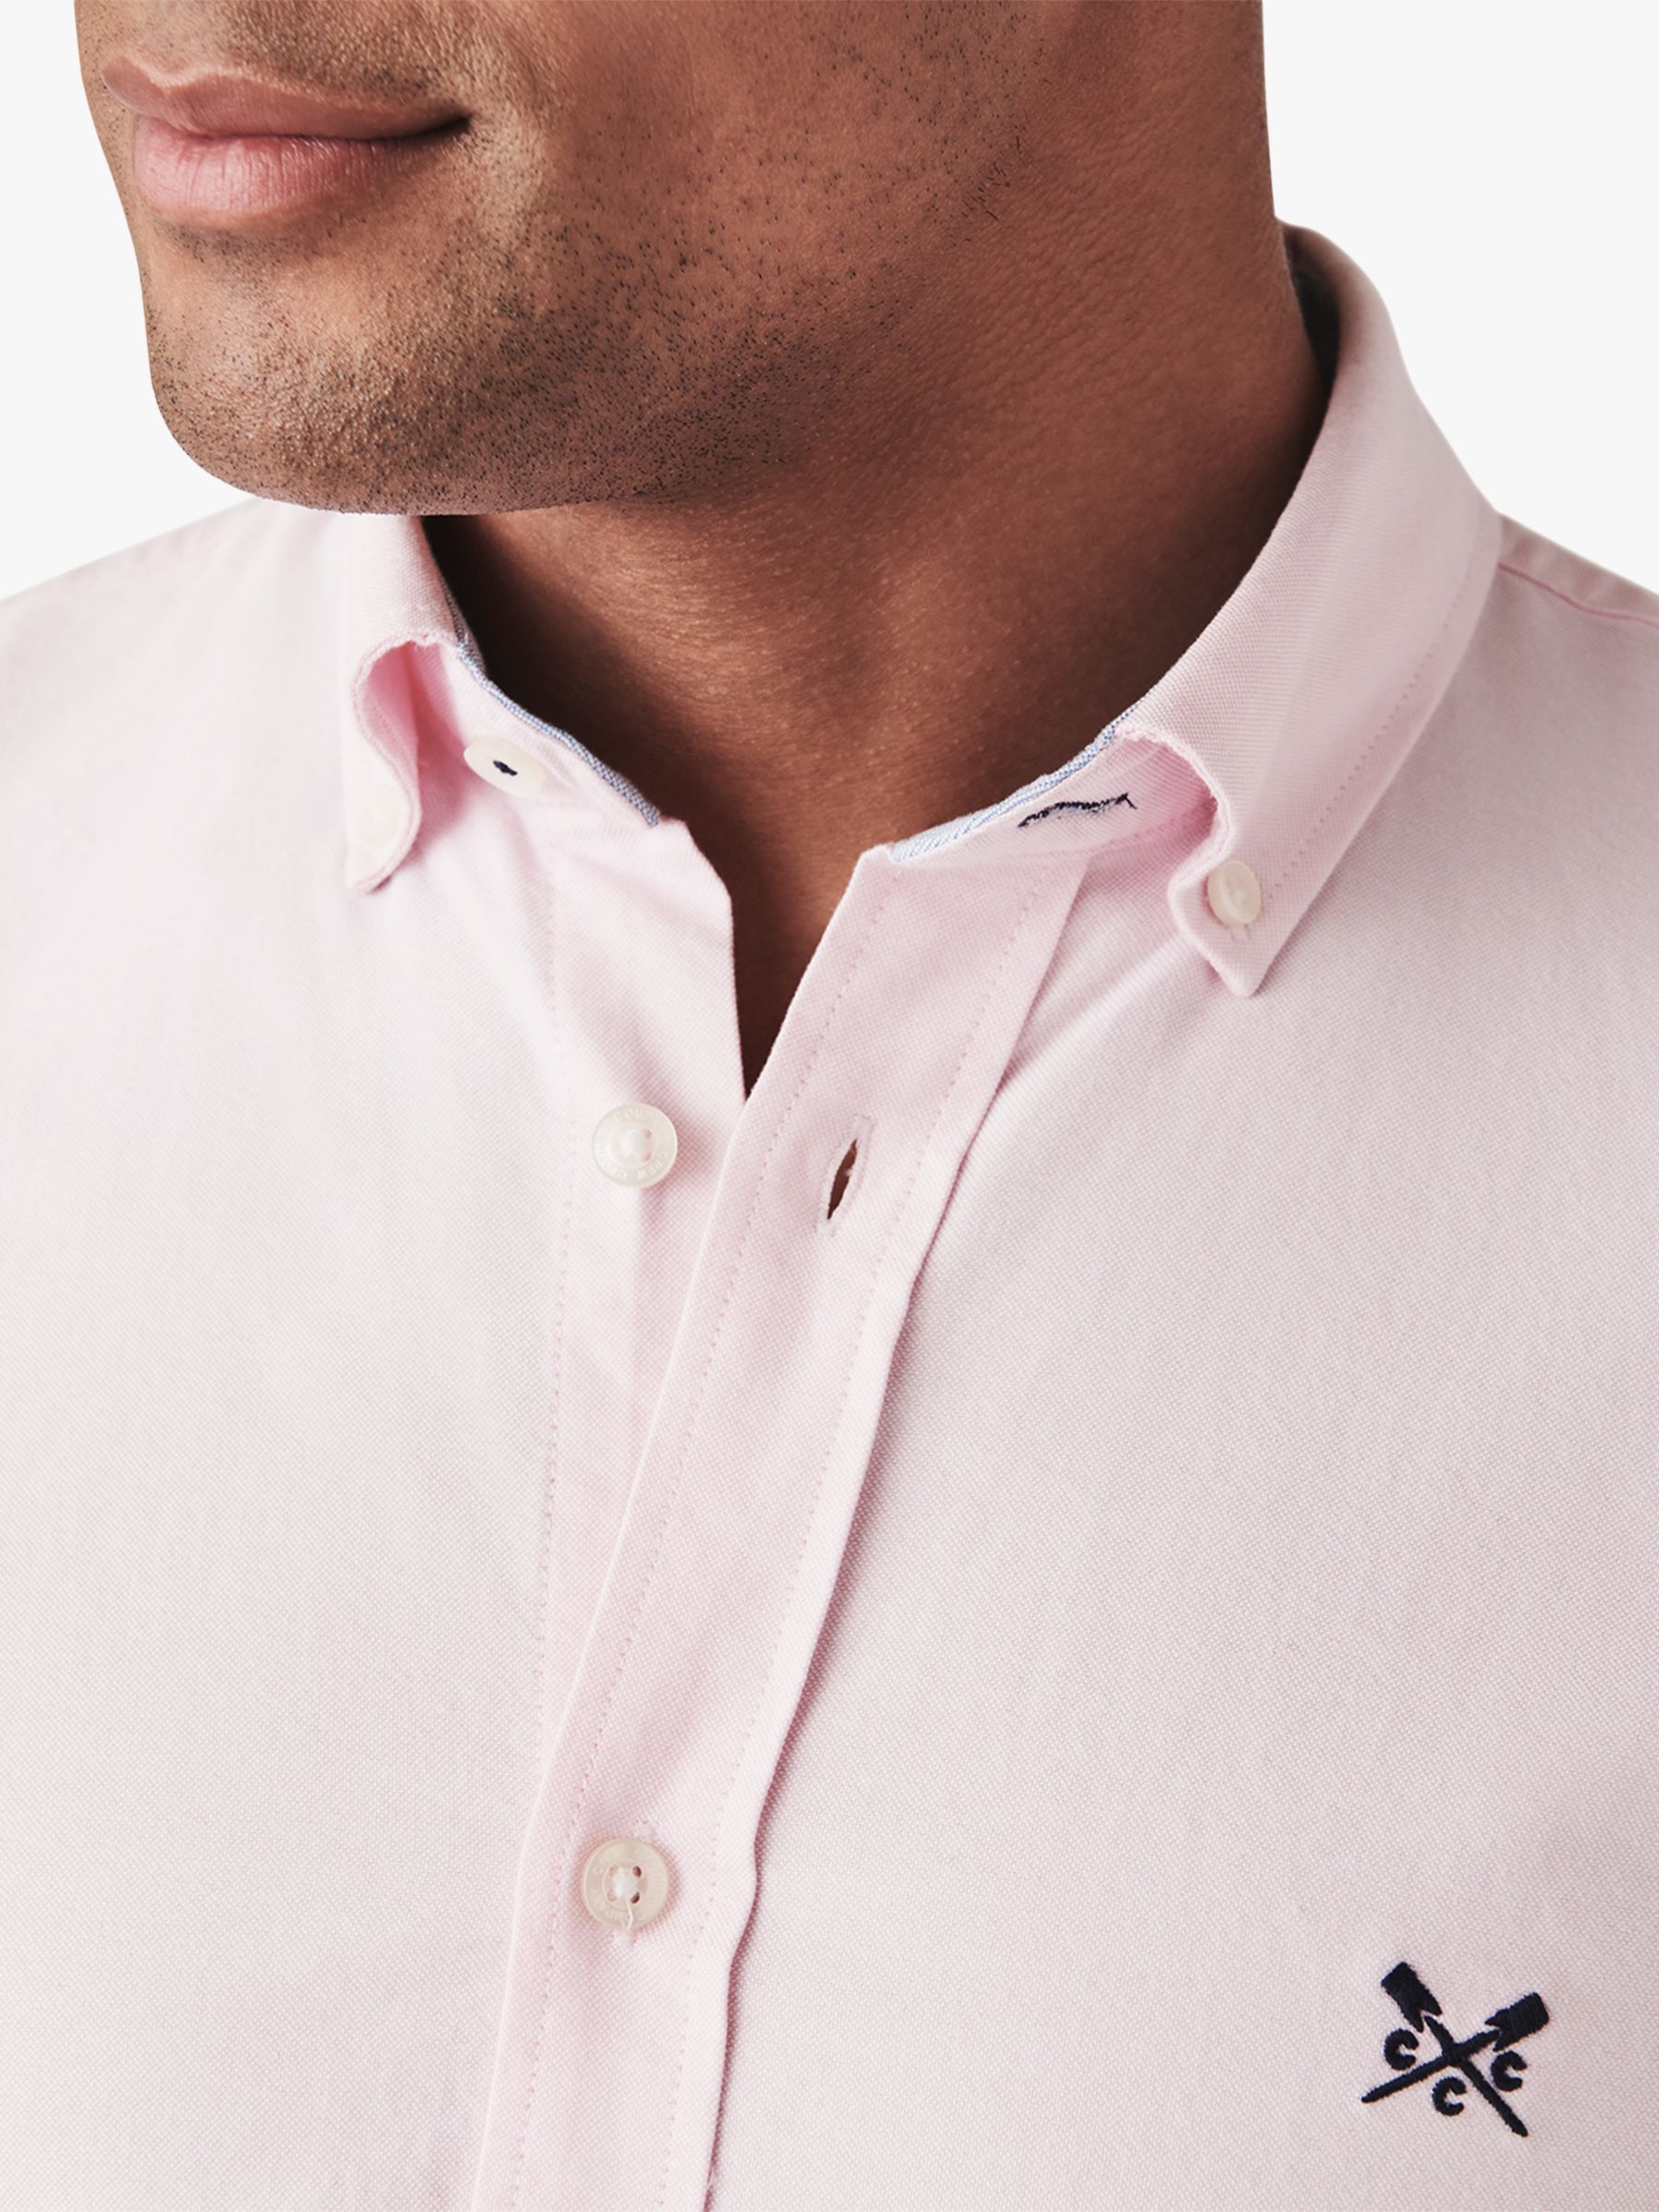 Crew Clothing Slim Fit Long Sleeve Oxford Shirt, Light Pink, XS